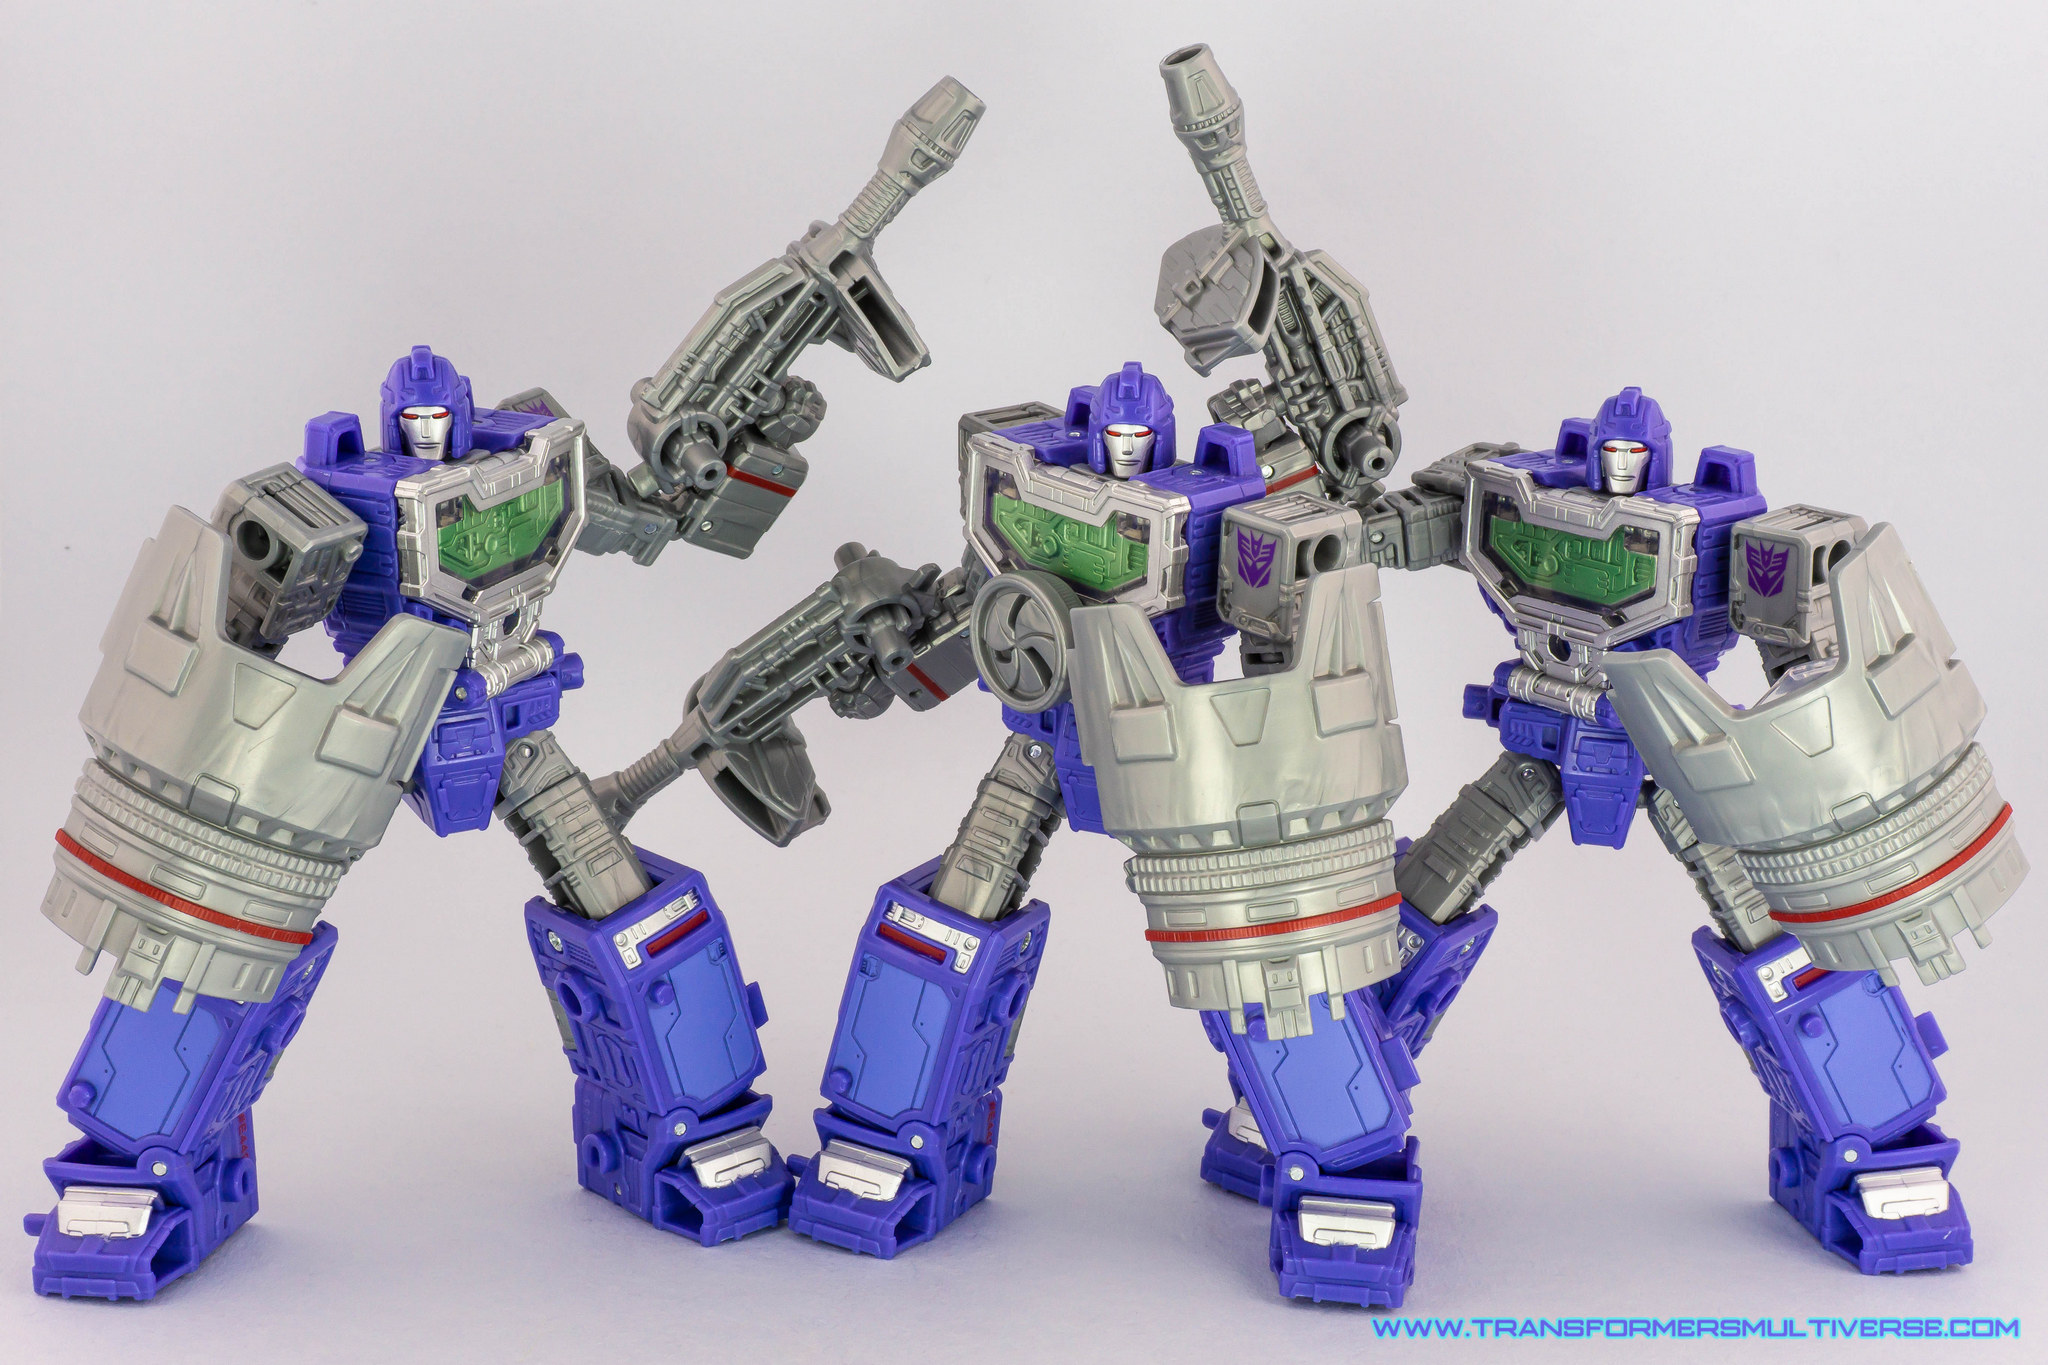 Transformers Siege Refraktor robot mode posed with blast shields 1